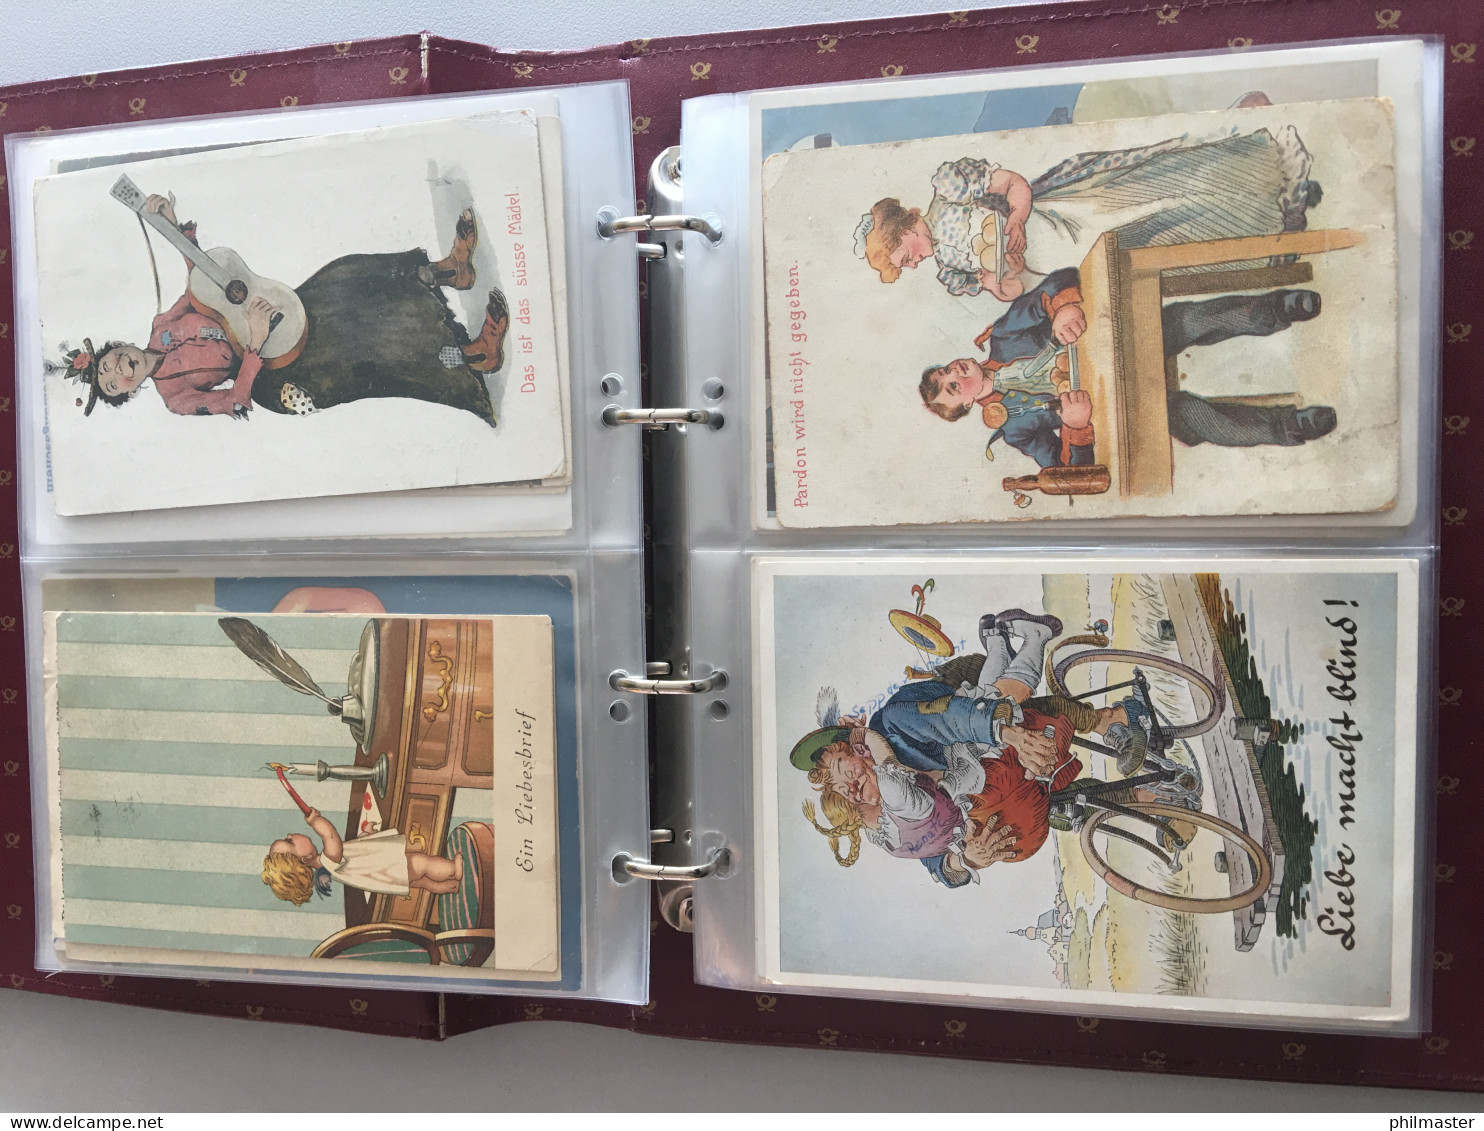 Sammlung Ansichtskarten, ca. 180 Karten Motiv Karikaturen im Album laut Abb.